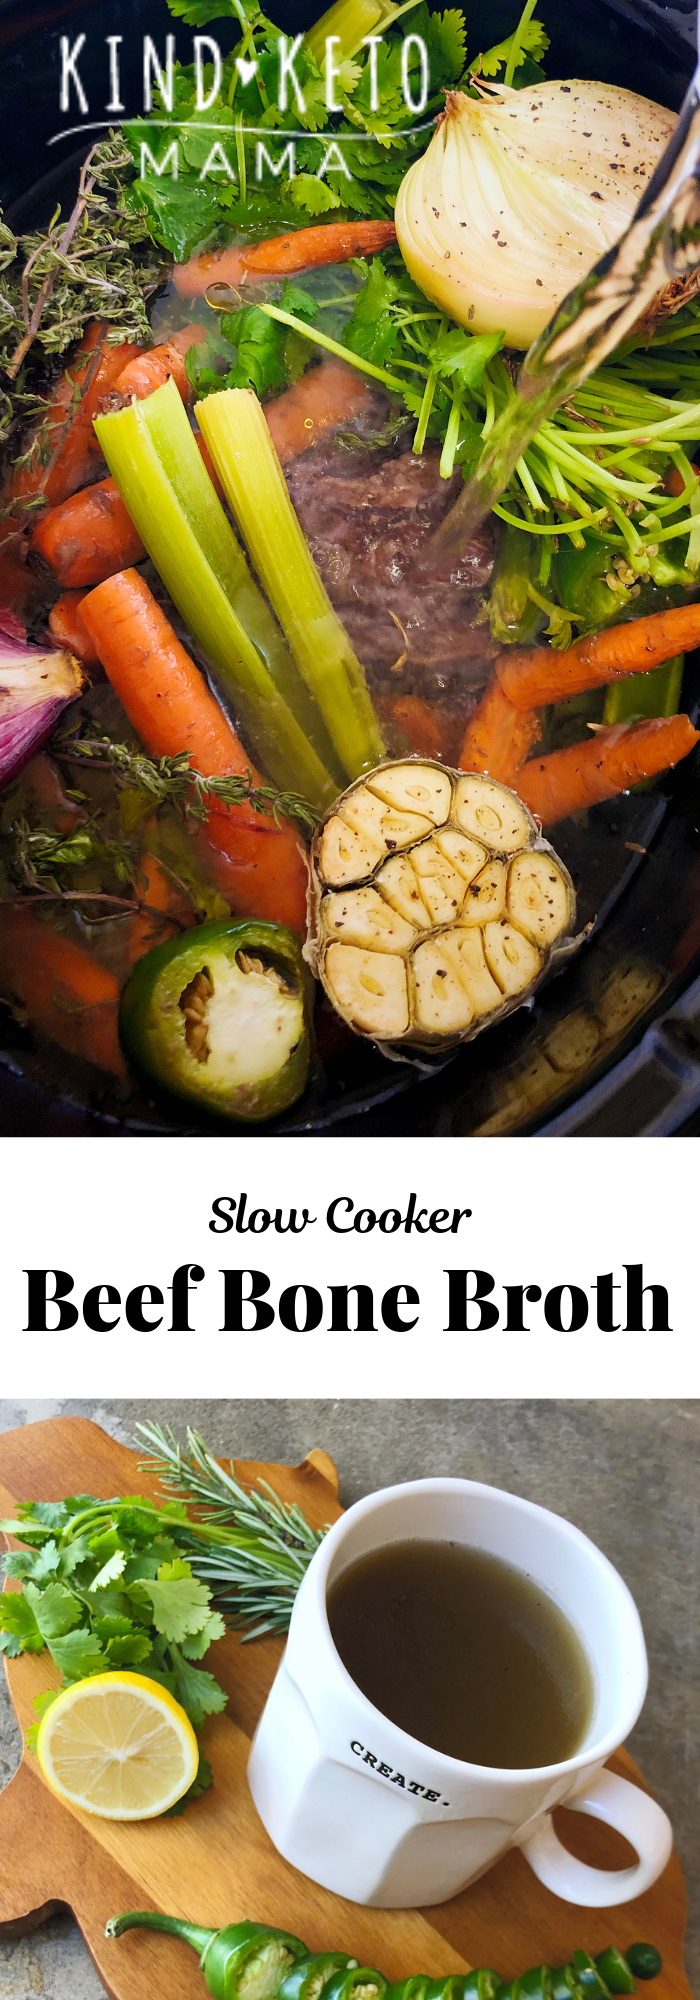 Beef Bone Broth-2